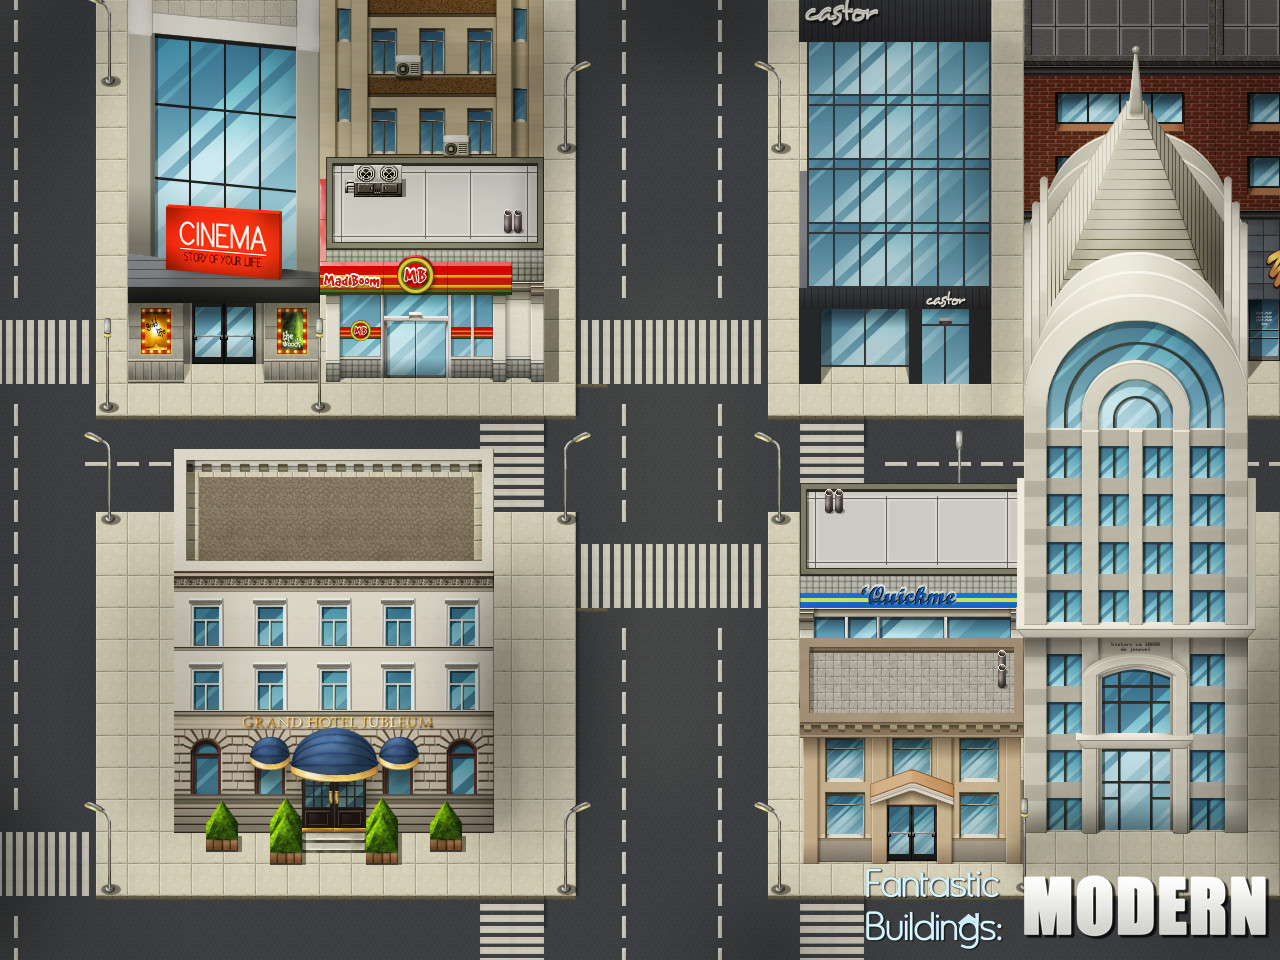 RPG Maker VX - Ace Fantastic Buildings: Modern DLC EU Steam CD Key, $5.07